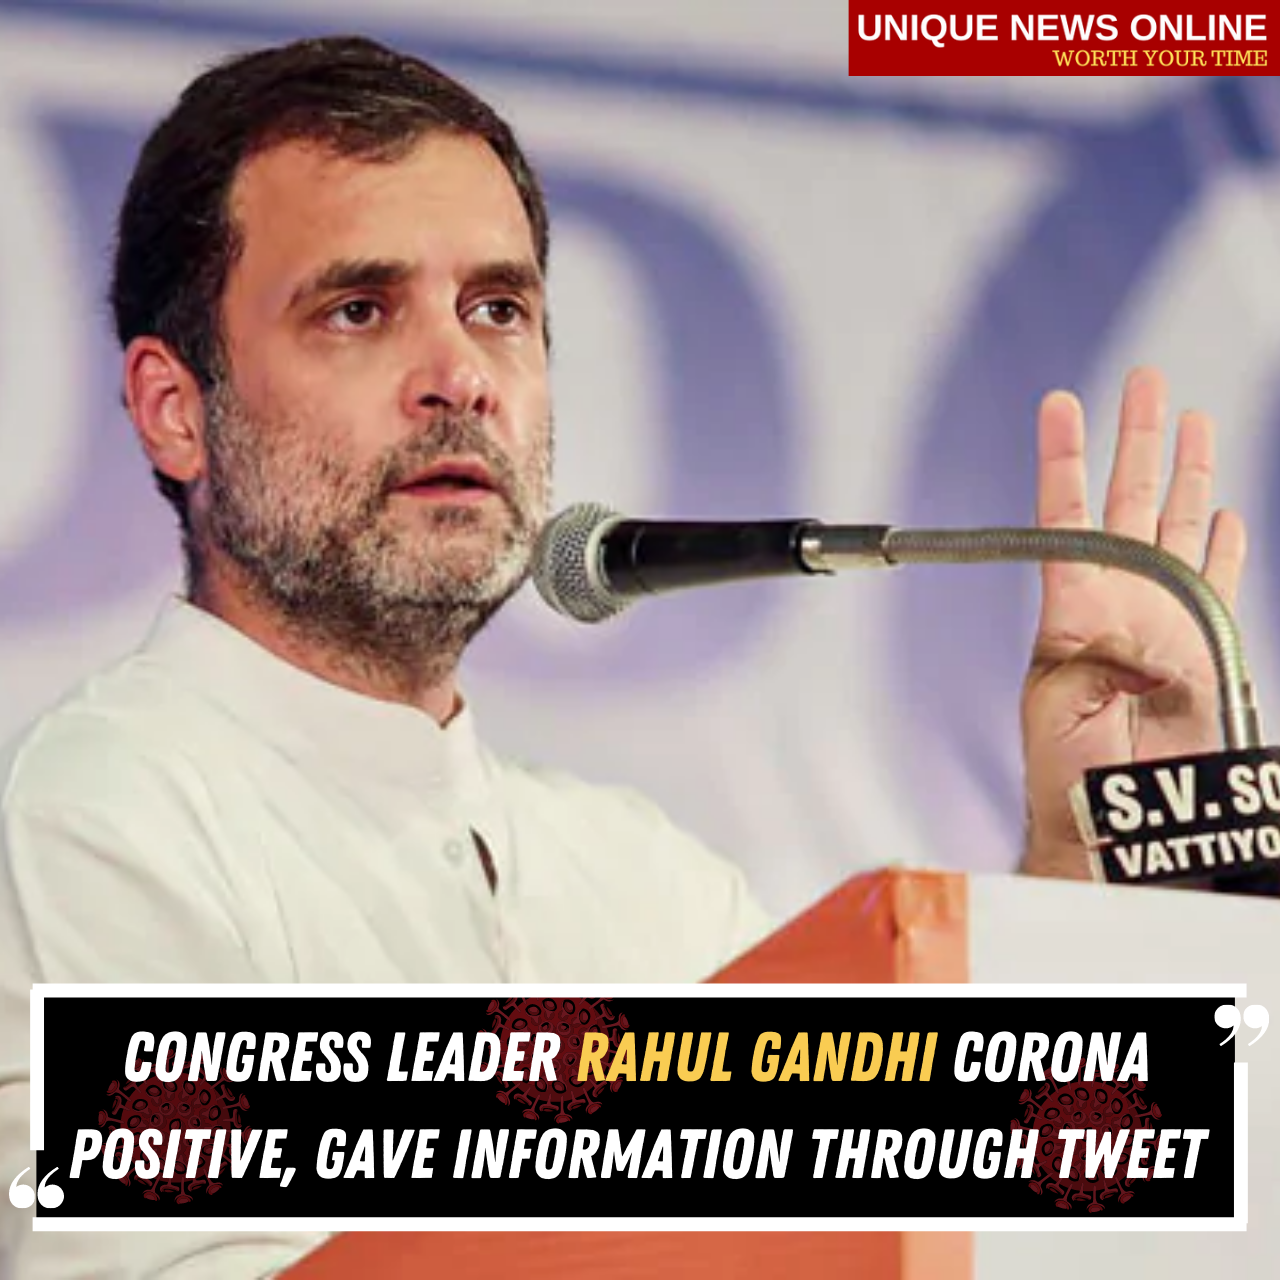 Congress leader Rahul Gandhi Corona positive, tweeted information